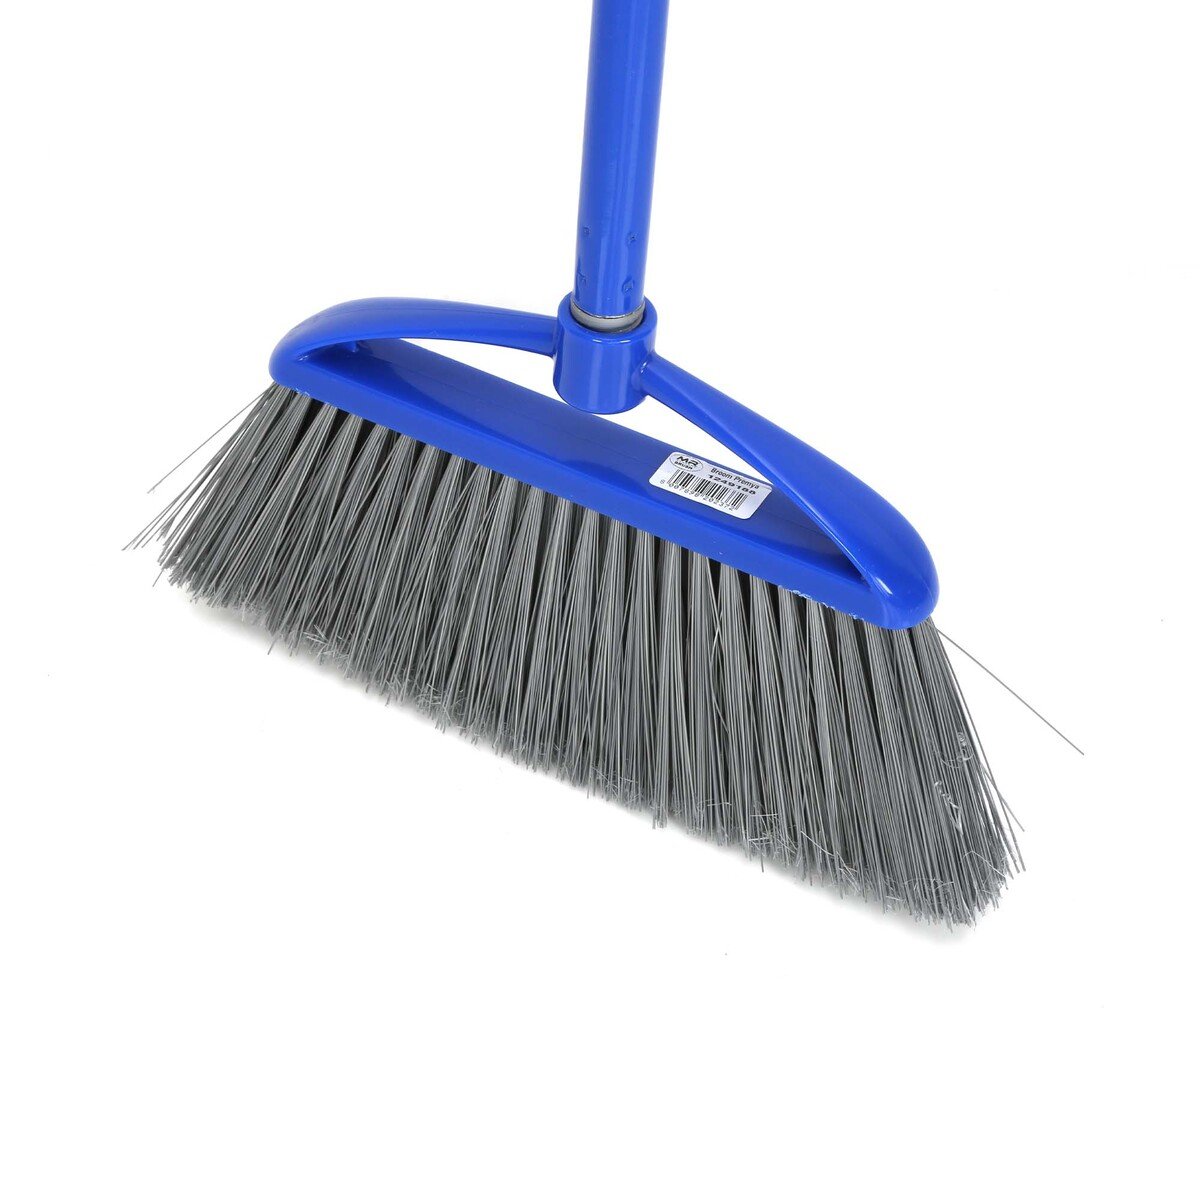 Mr.Brush 01002370012  Soft Broom with long Stick,Blue color